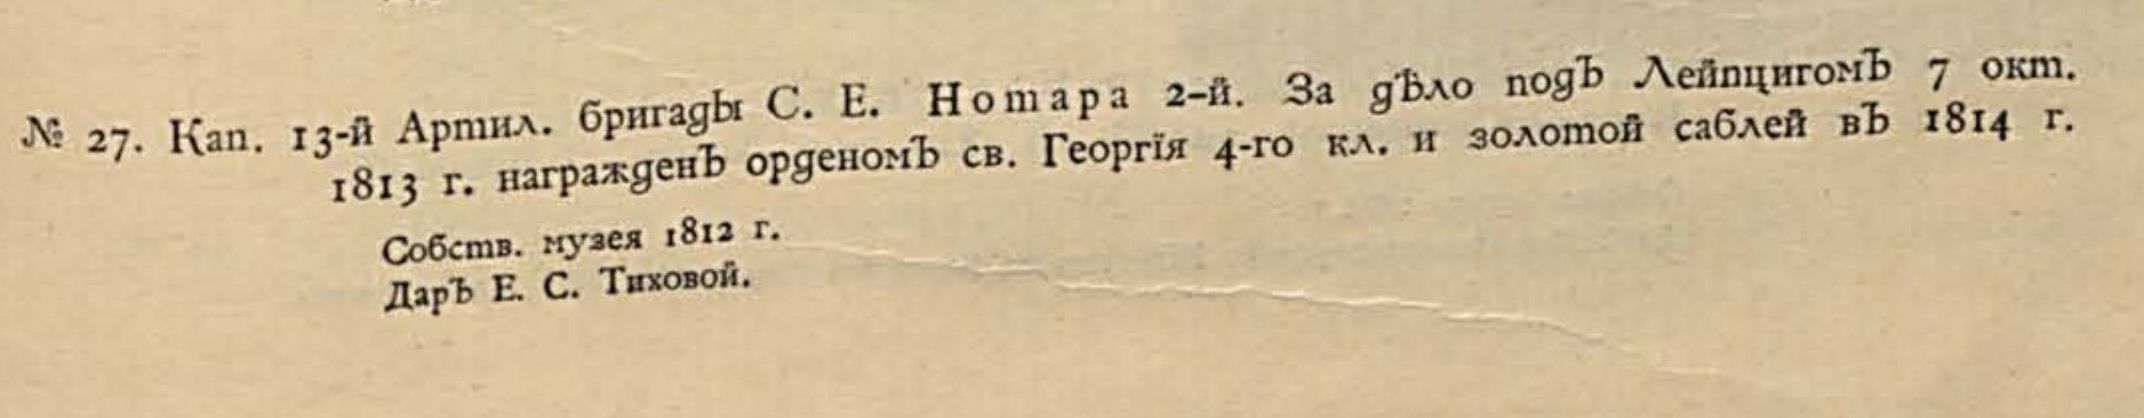 Описание портрета в каталоге выставки 1812 года. М., 1913. С. 95